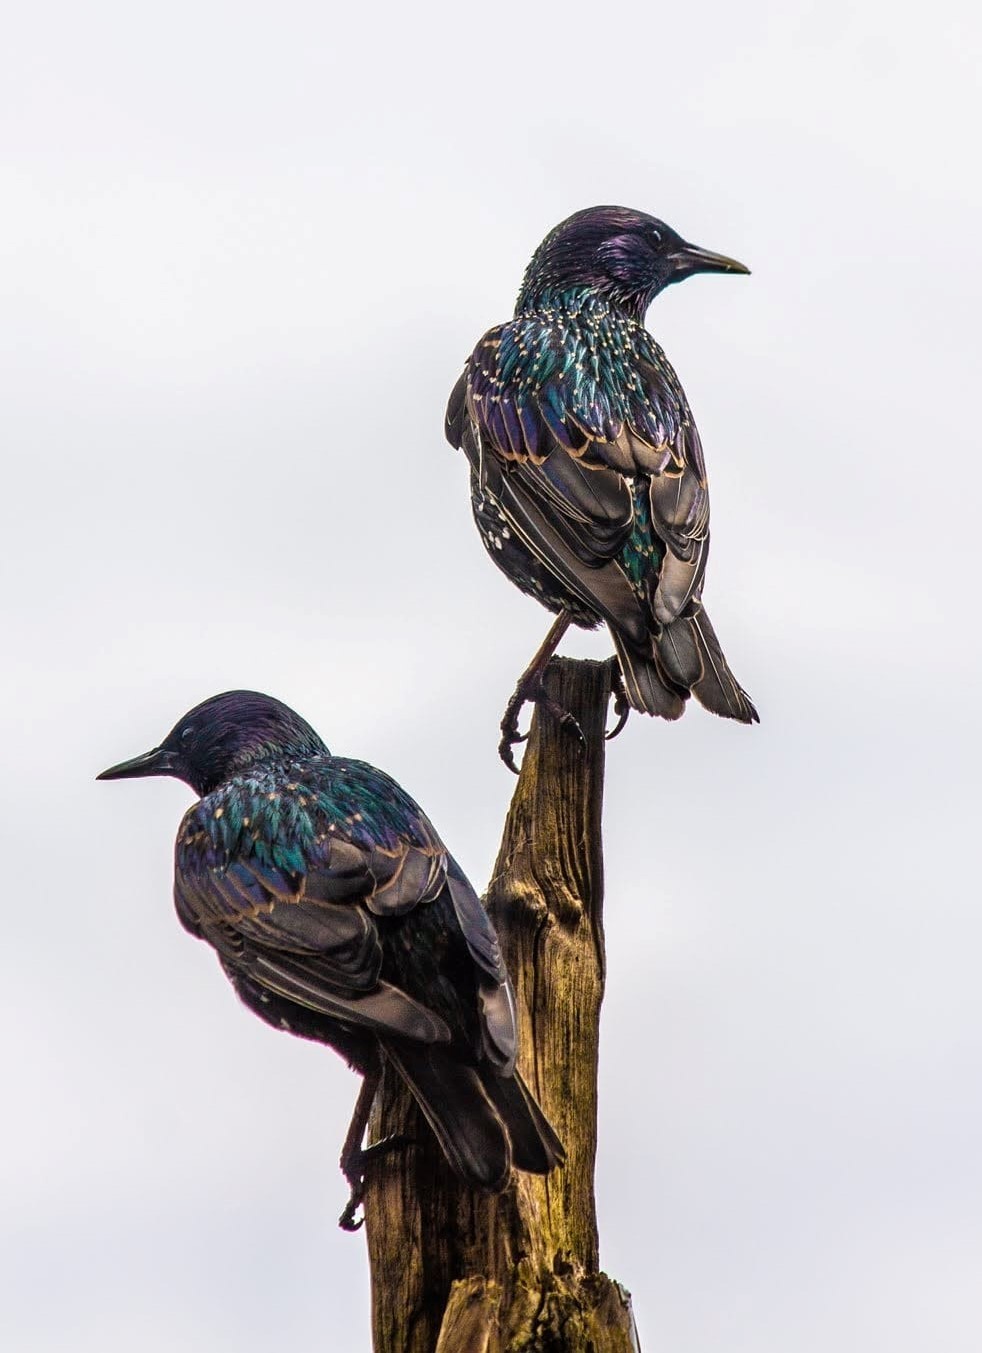 Starlings on the feeder by Andrew Gardner